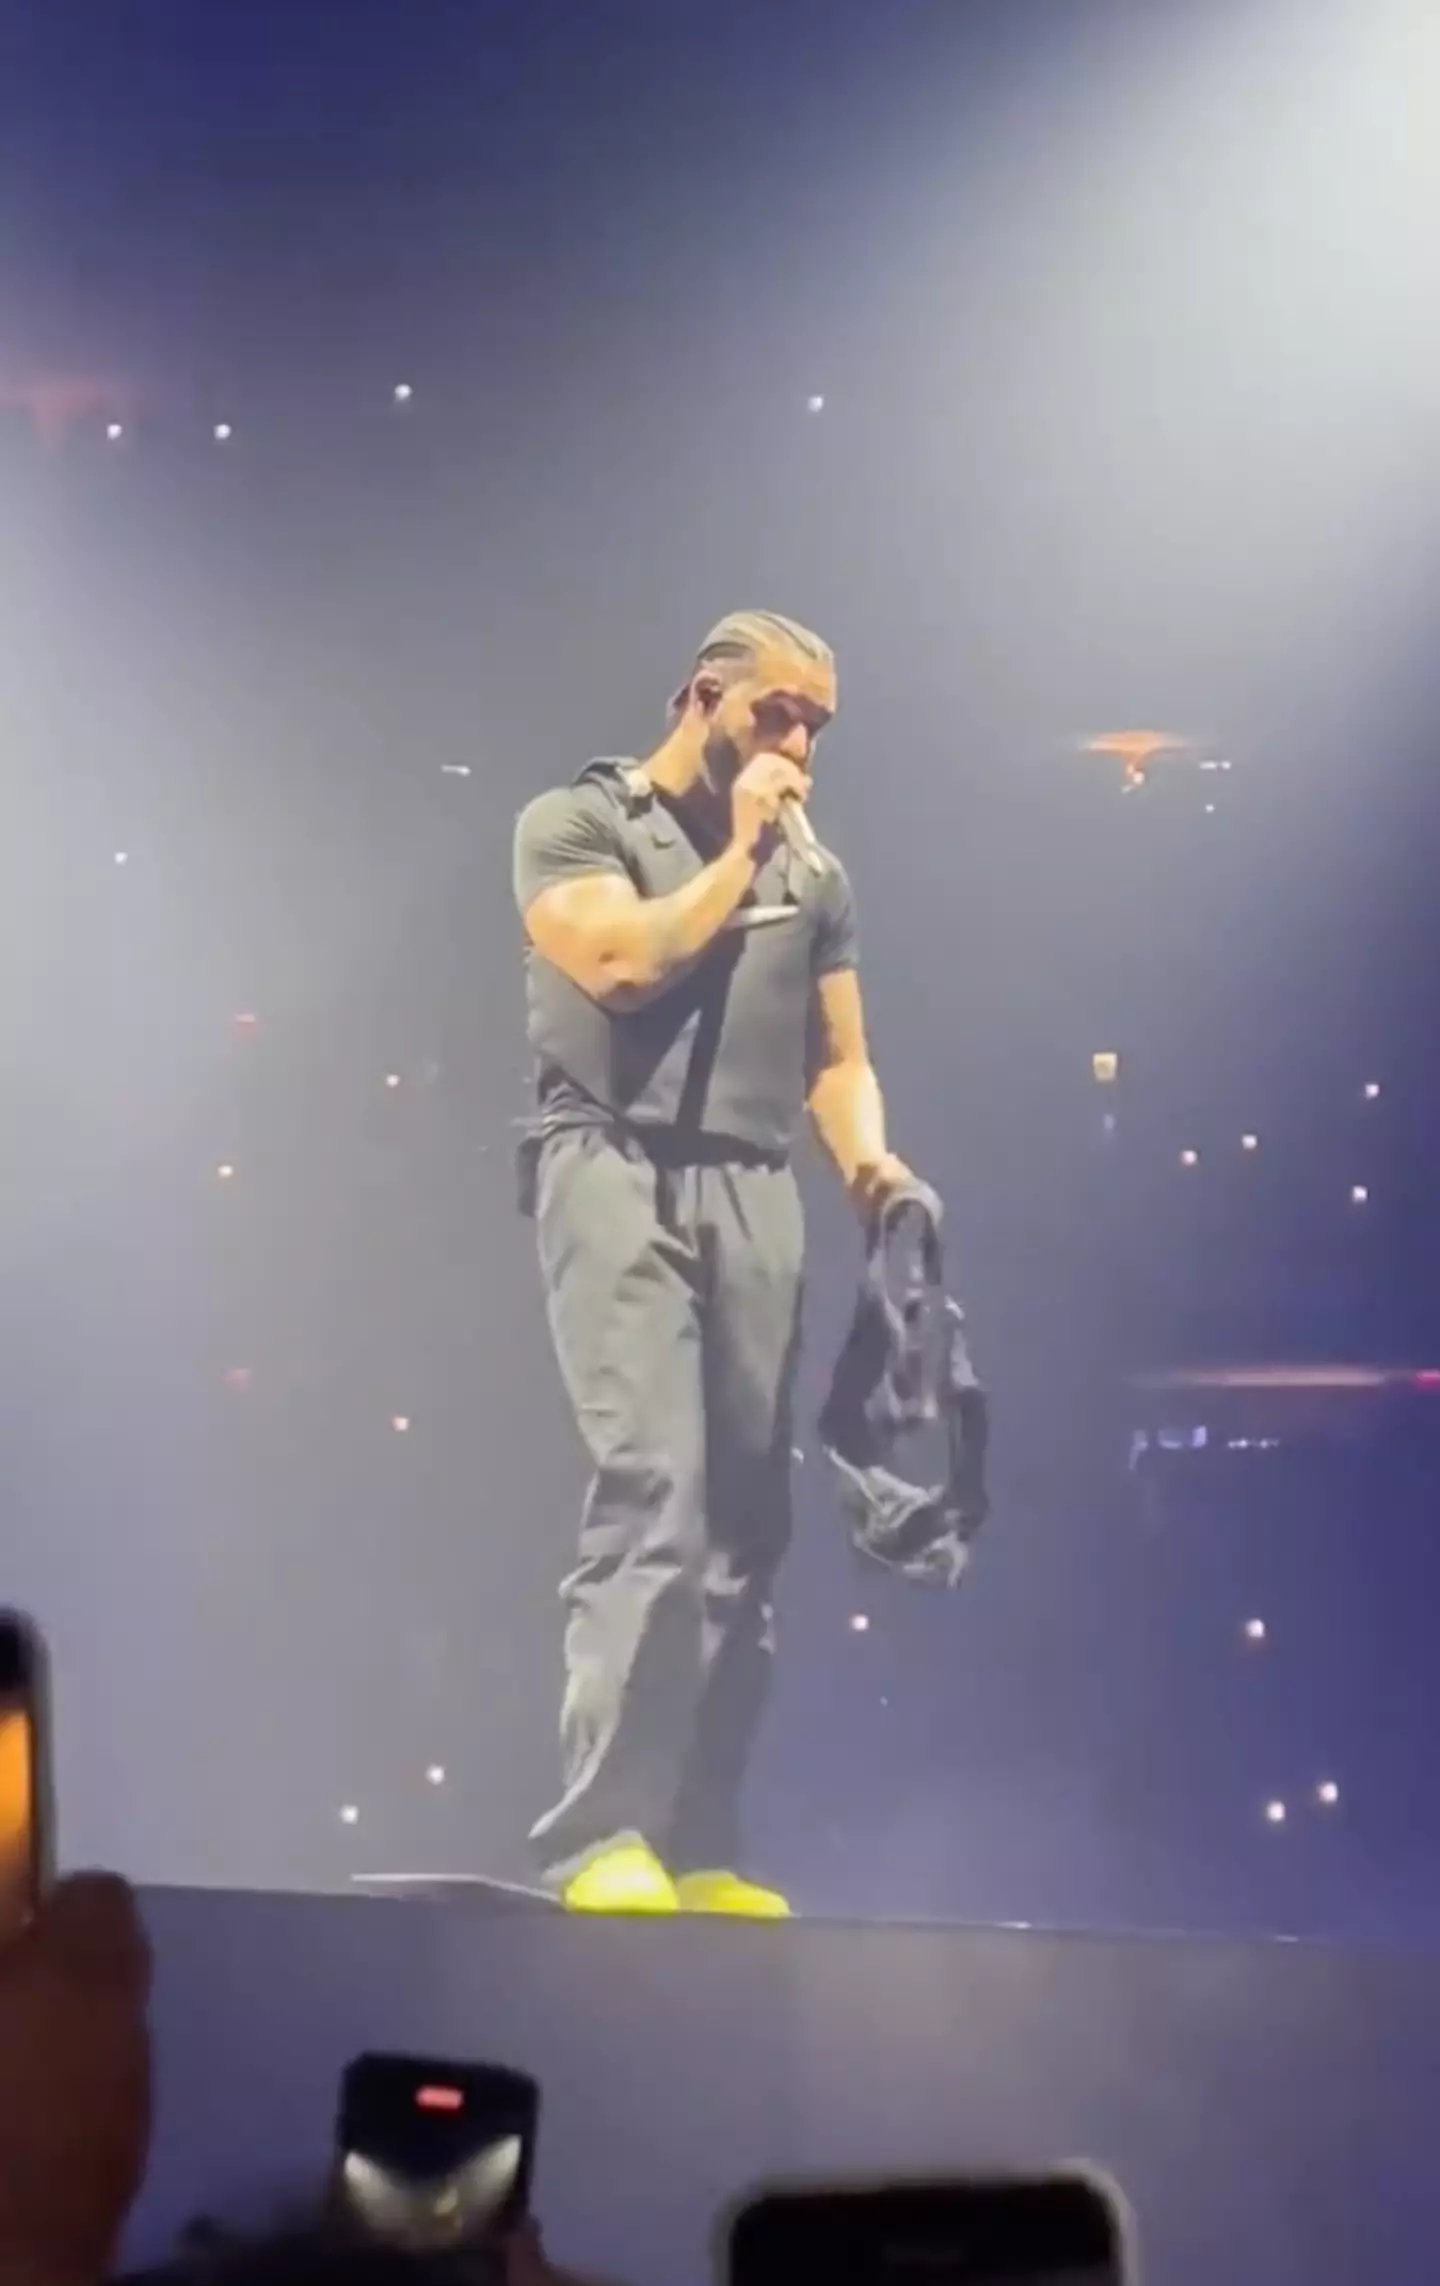 Drake Lusts Over Fan's Mother, Rocks 'Custom' 46J Bra As A Durag